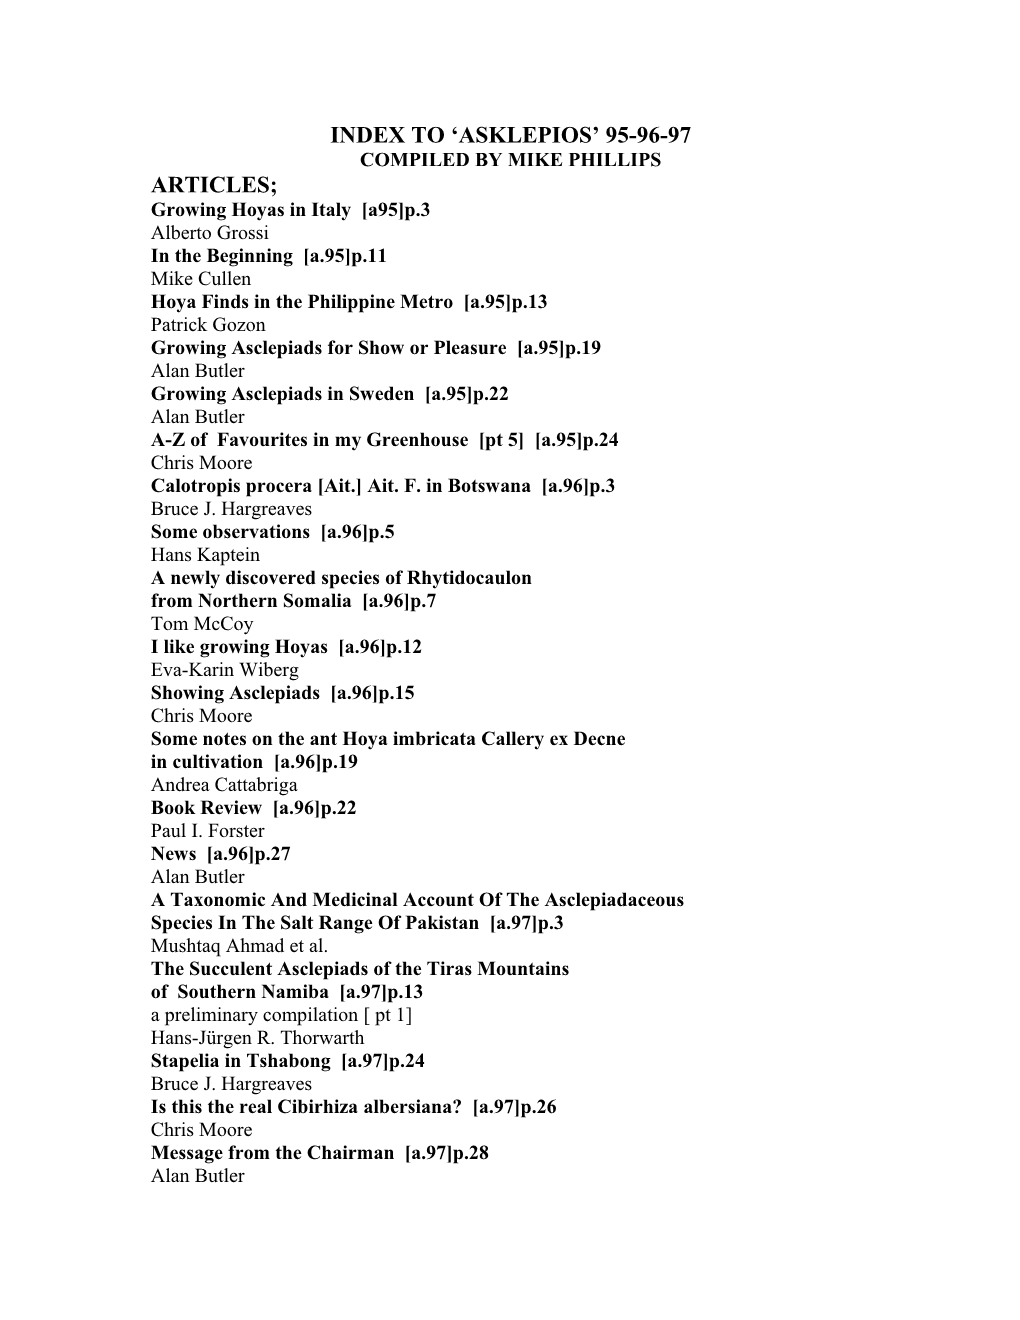 Index to Asklepios 95-96-97